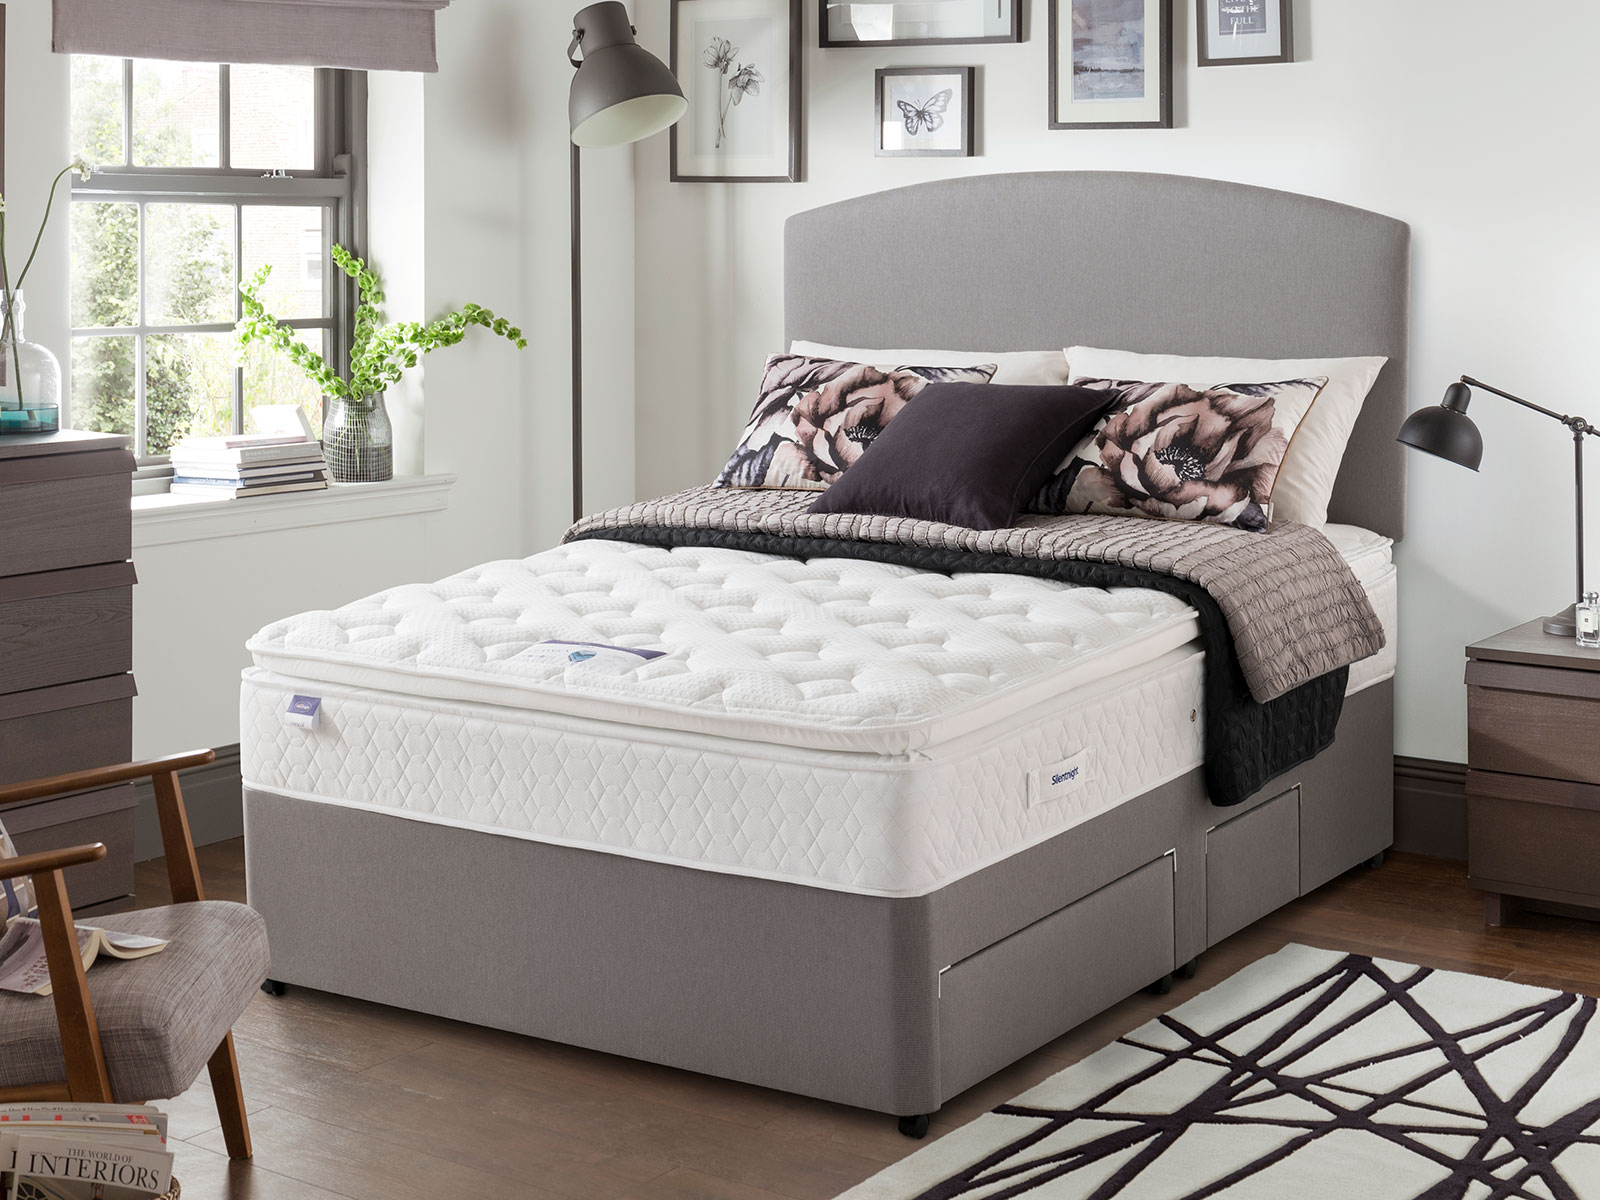 silent night miracoil 3 ultimate pillow top mattress